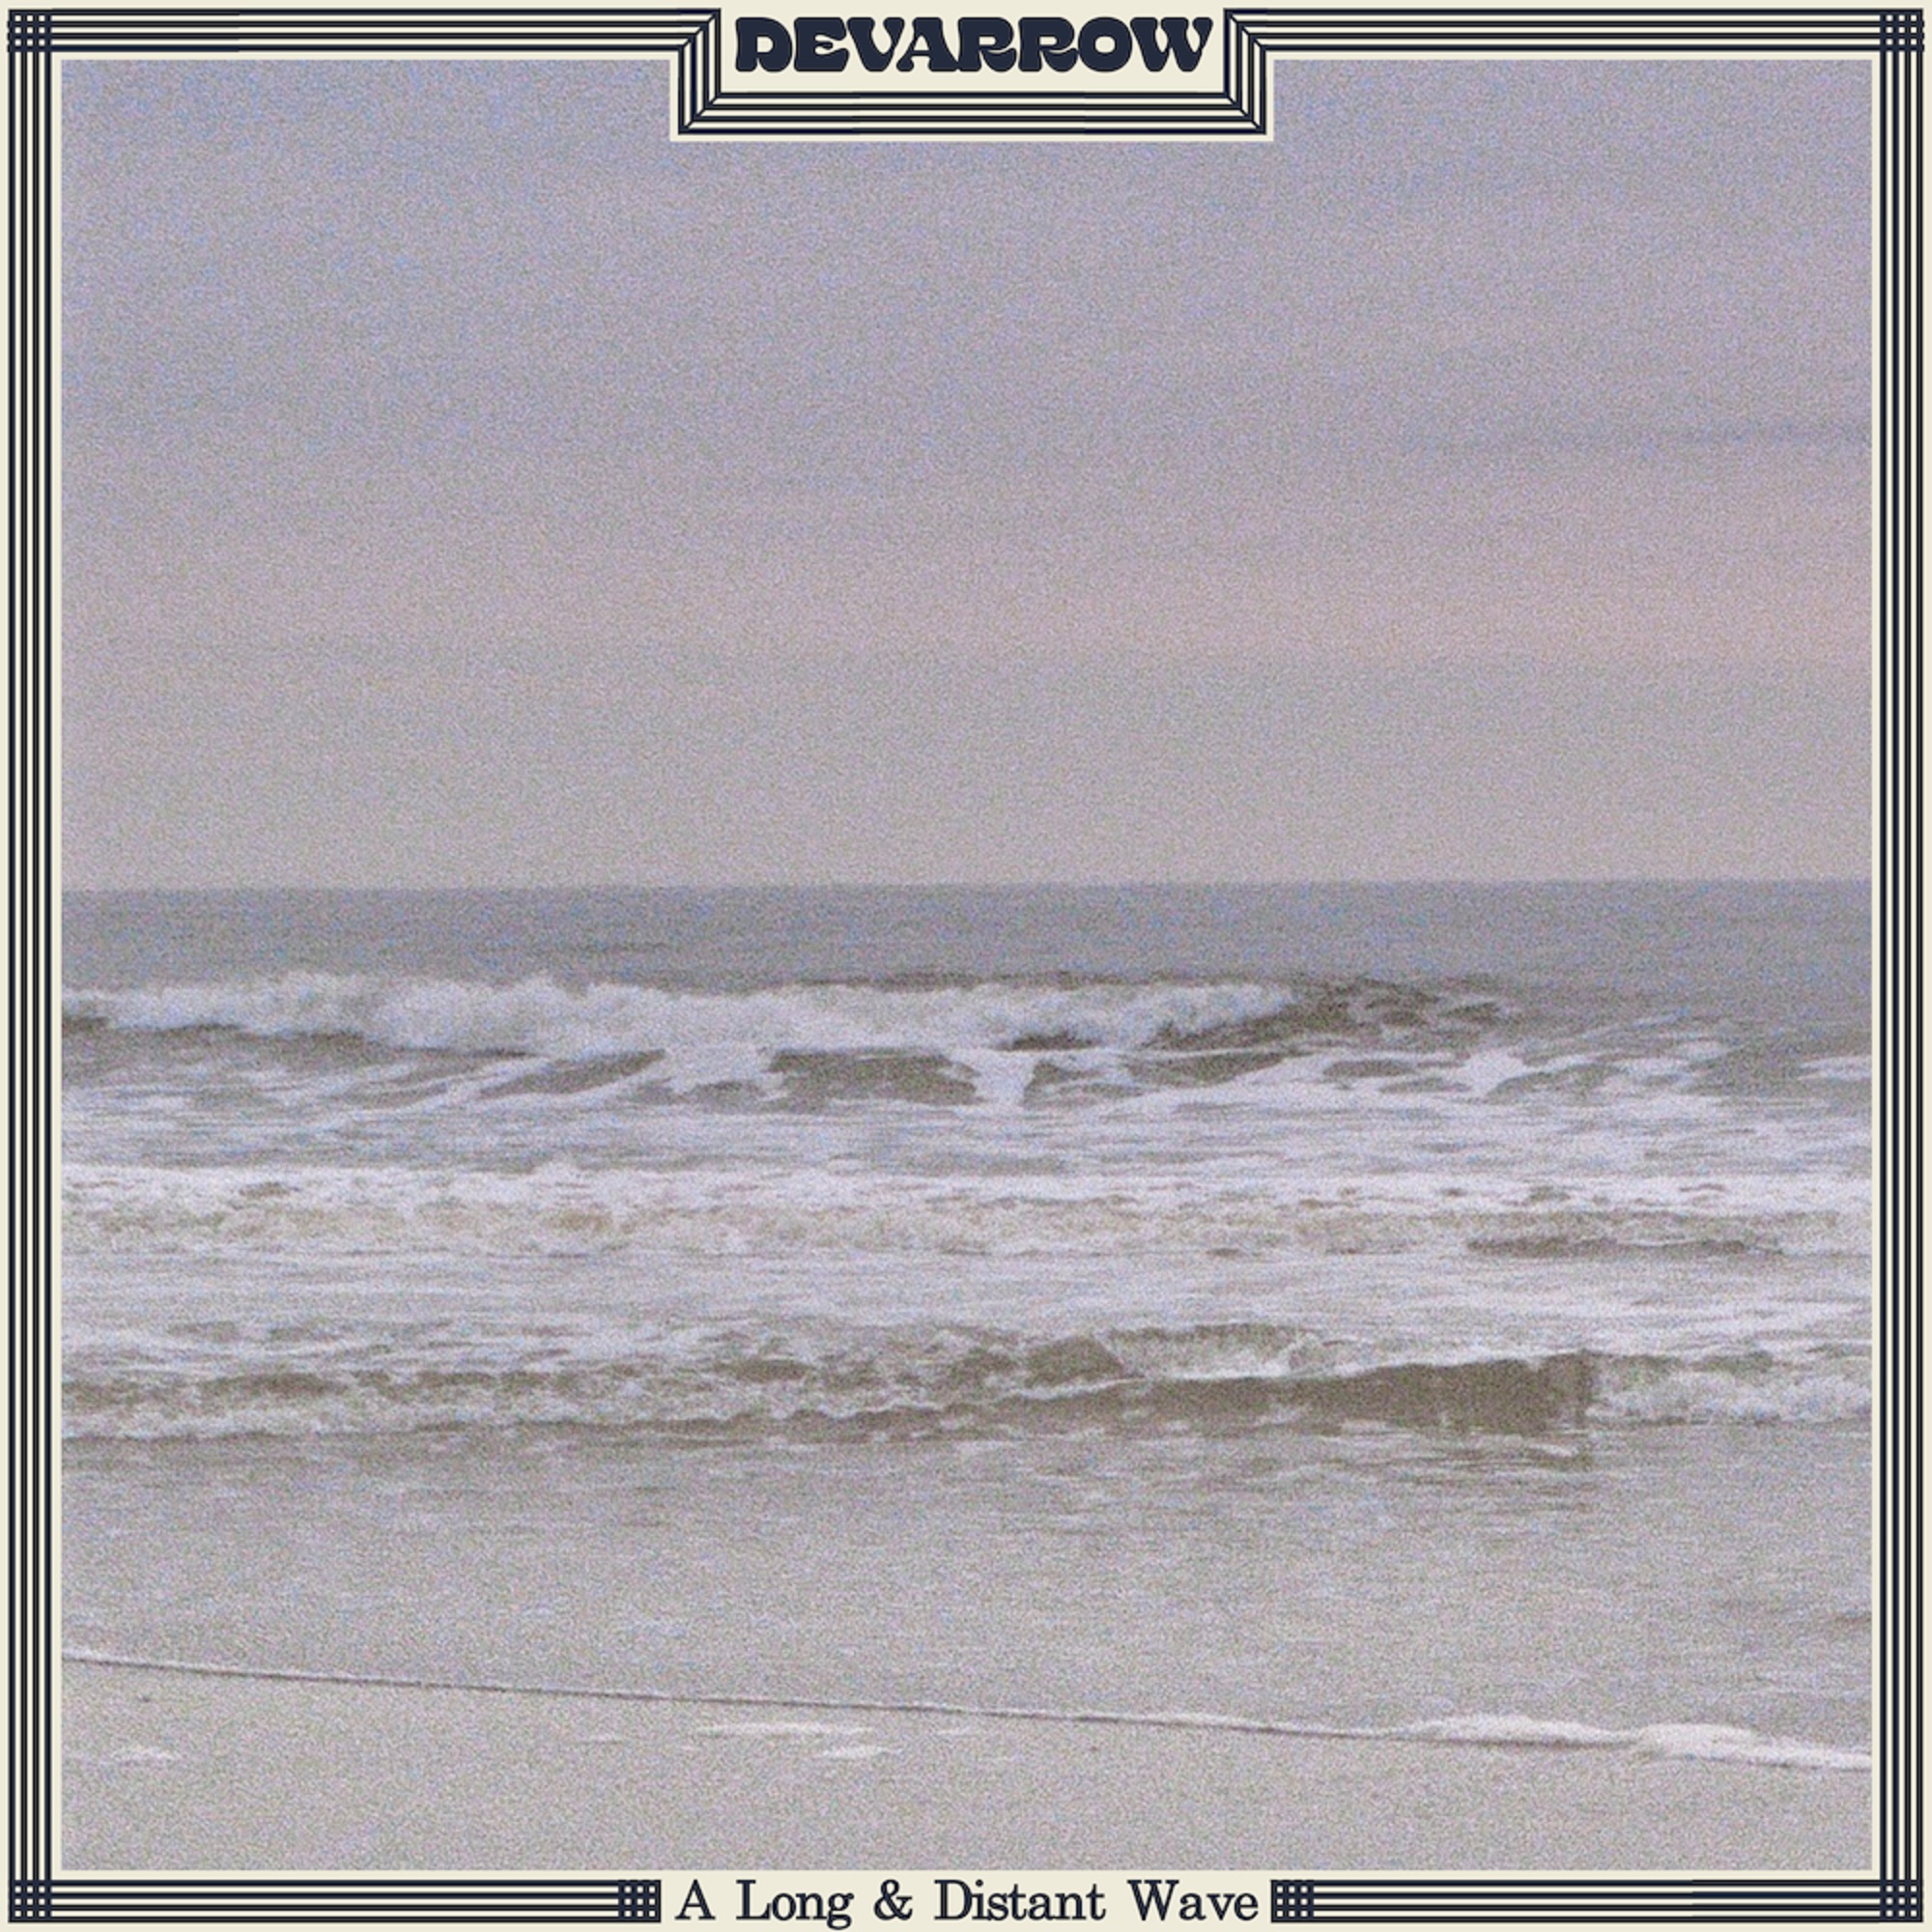 Devarrow's surprise Album drop defies Folk-Pop Sensibilities